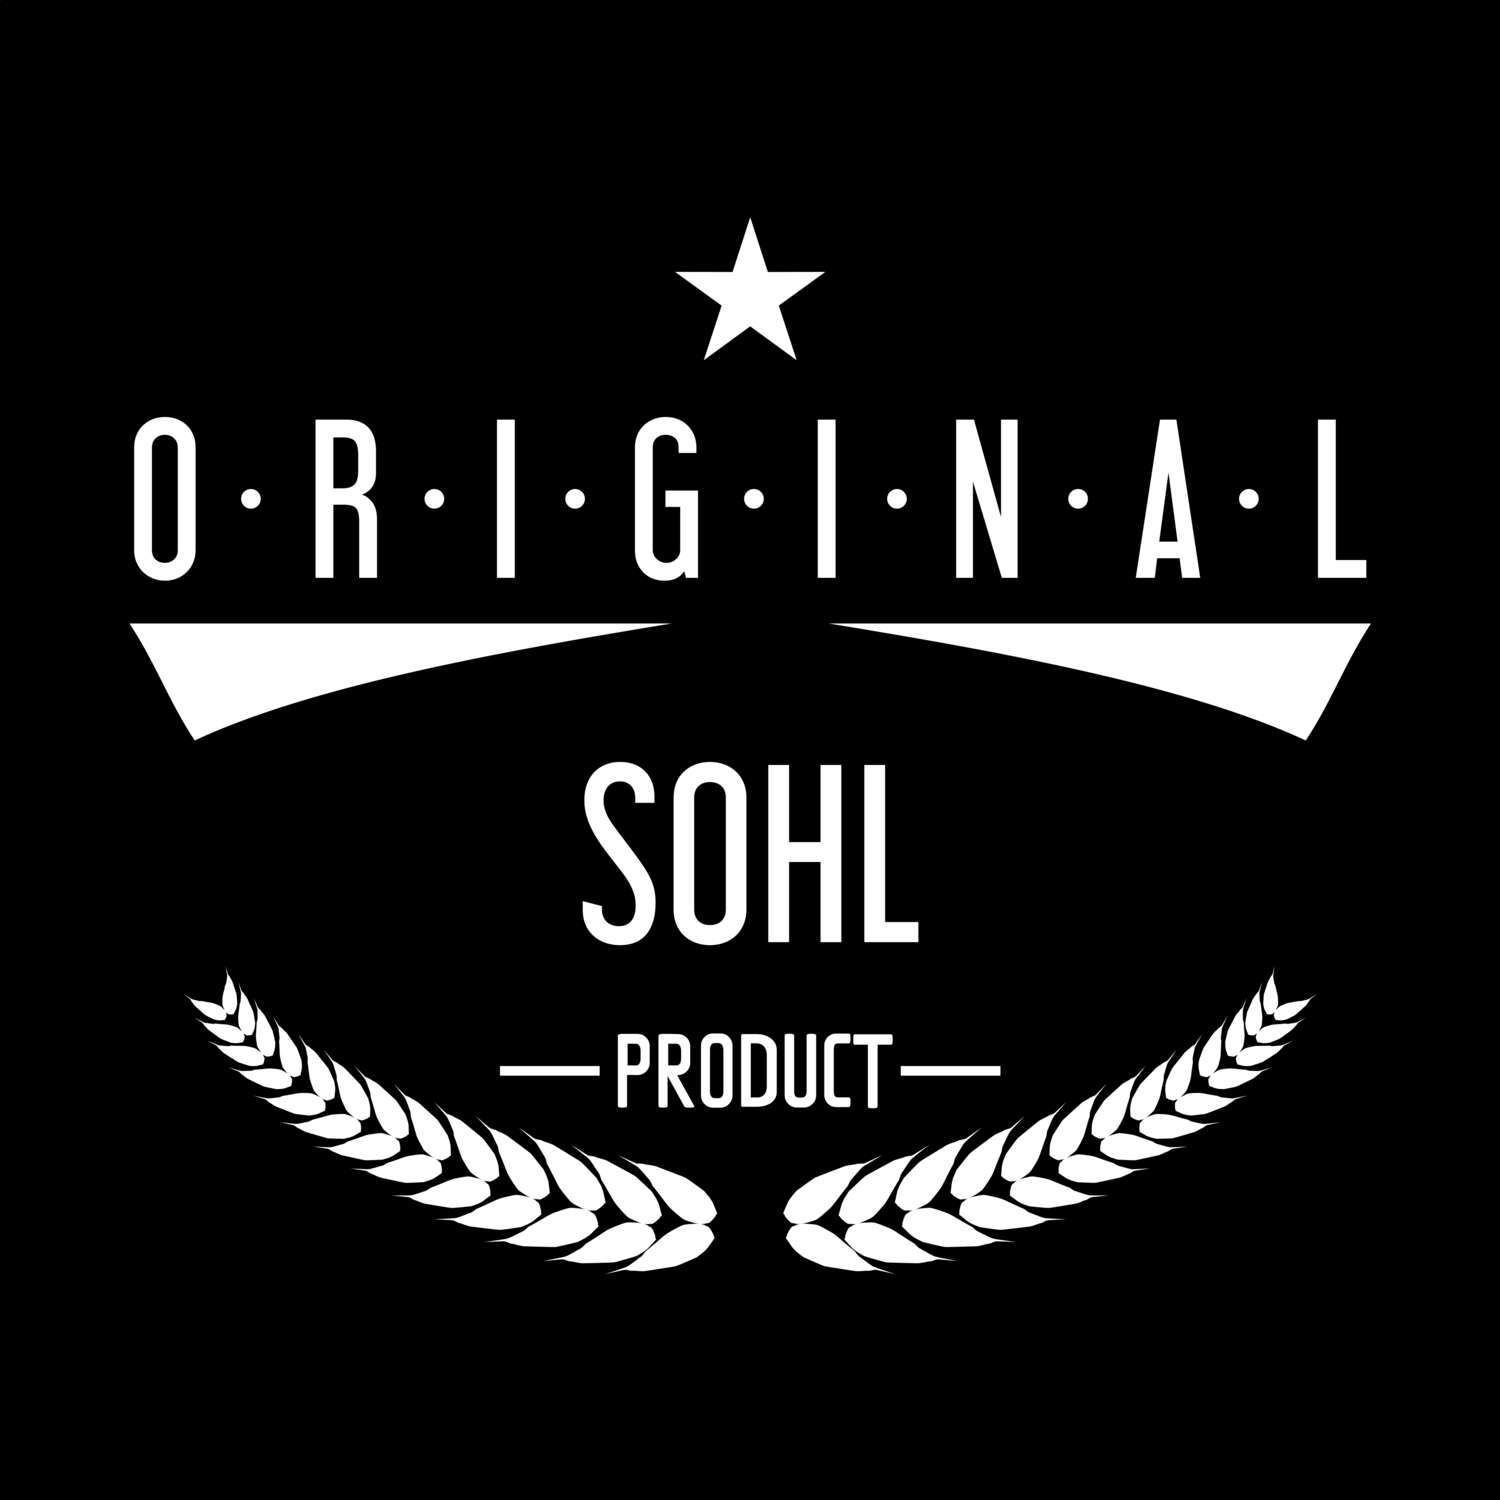 Sohl T-Shirt »Original Product«